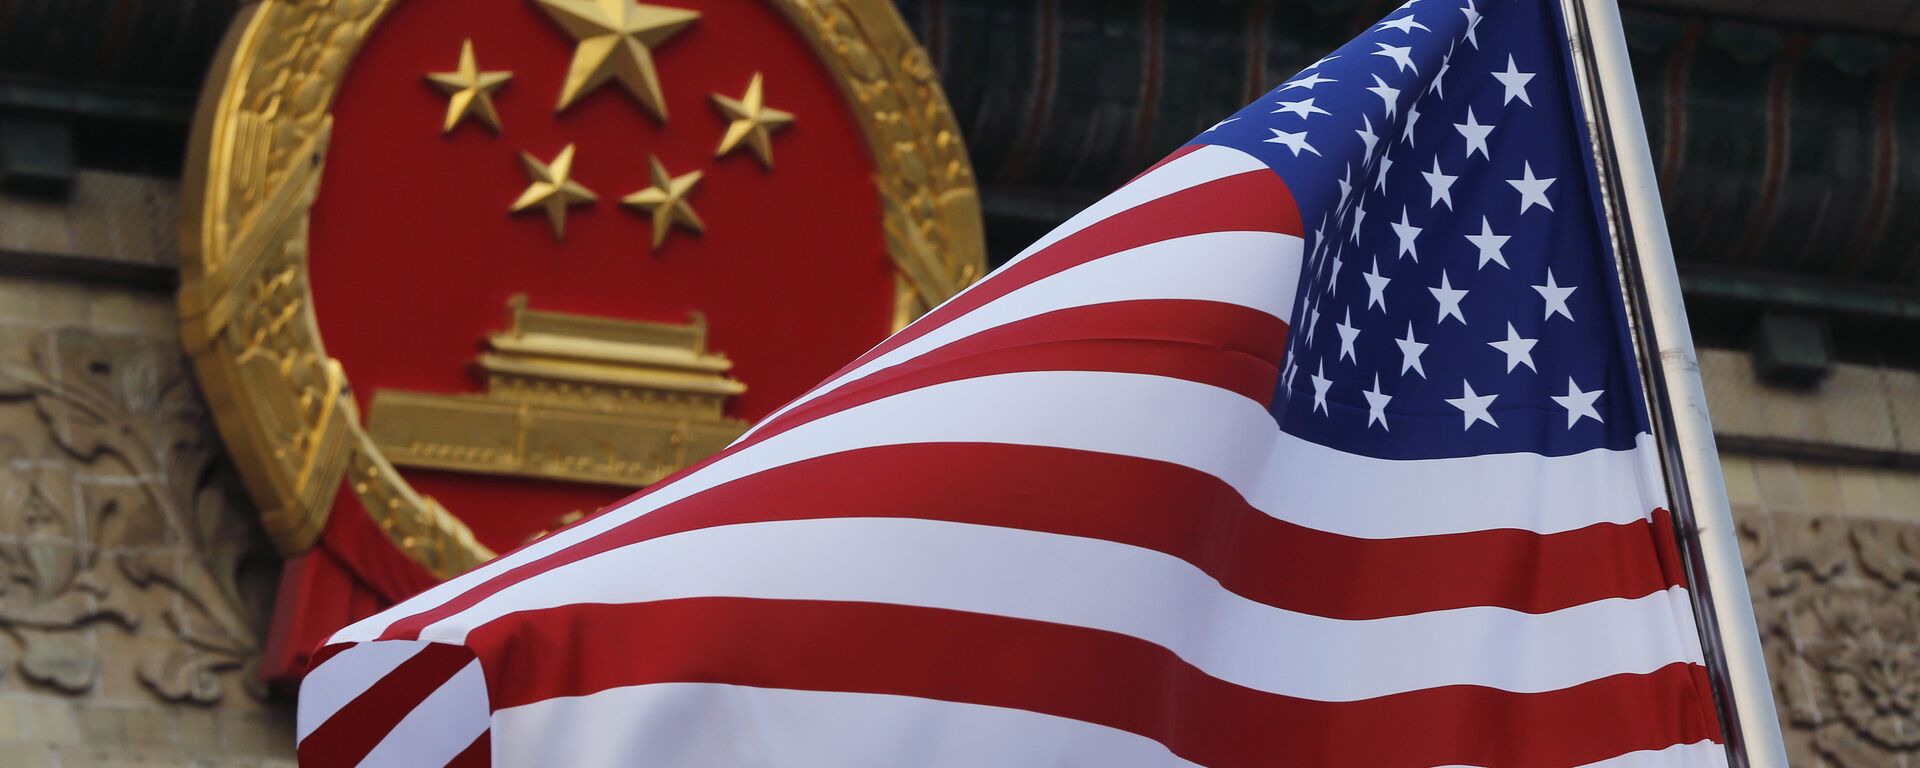 La bandera de EEUU y el emblema de China  - Sputnik Mundo, 1920, 16.10.2021